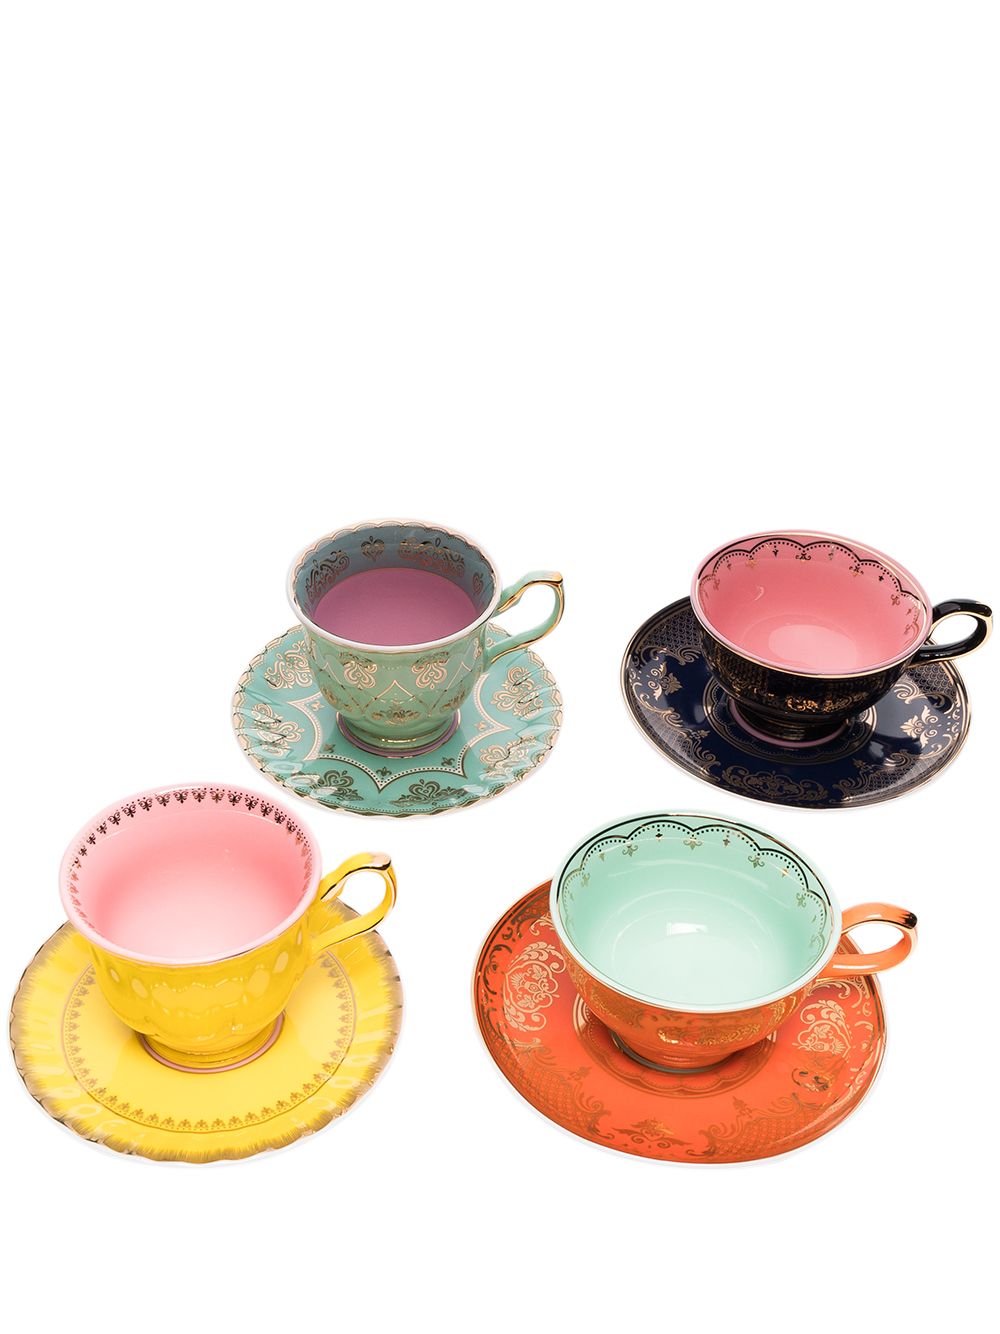 POLSPOTTEN Grandpa glazed teacups (set of 4) - Blue von POLSPOTTEN